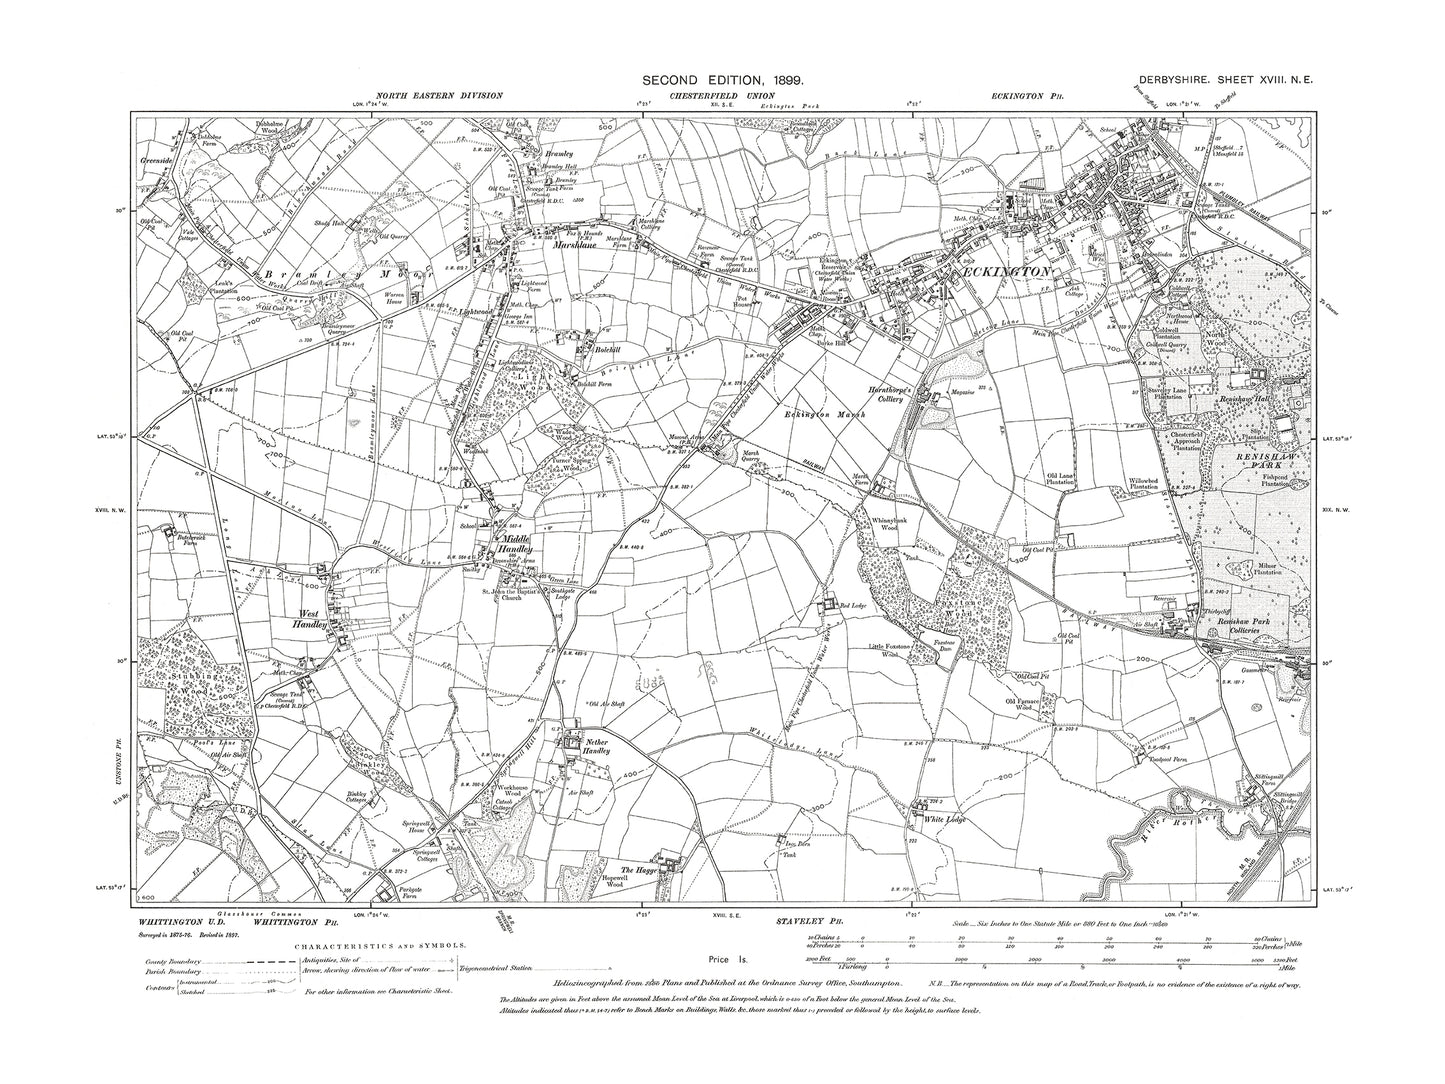 Old OS map dated 1899, showing Eckington, Middle Handley, Marshlane in Derbyshire 18NE